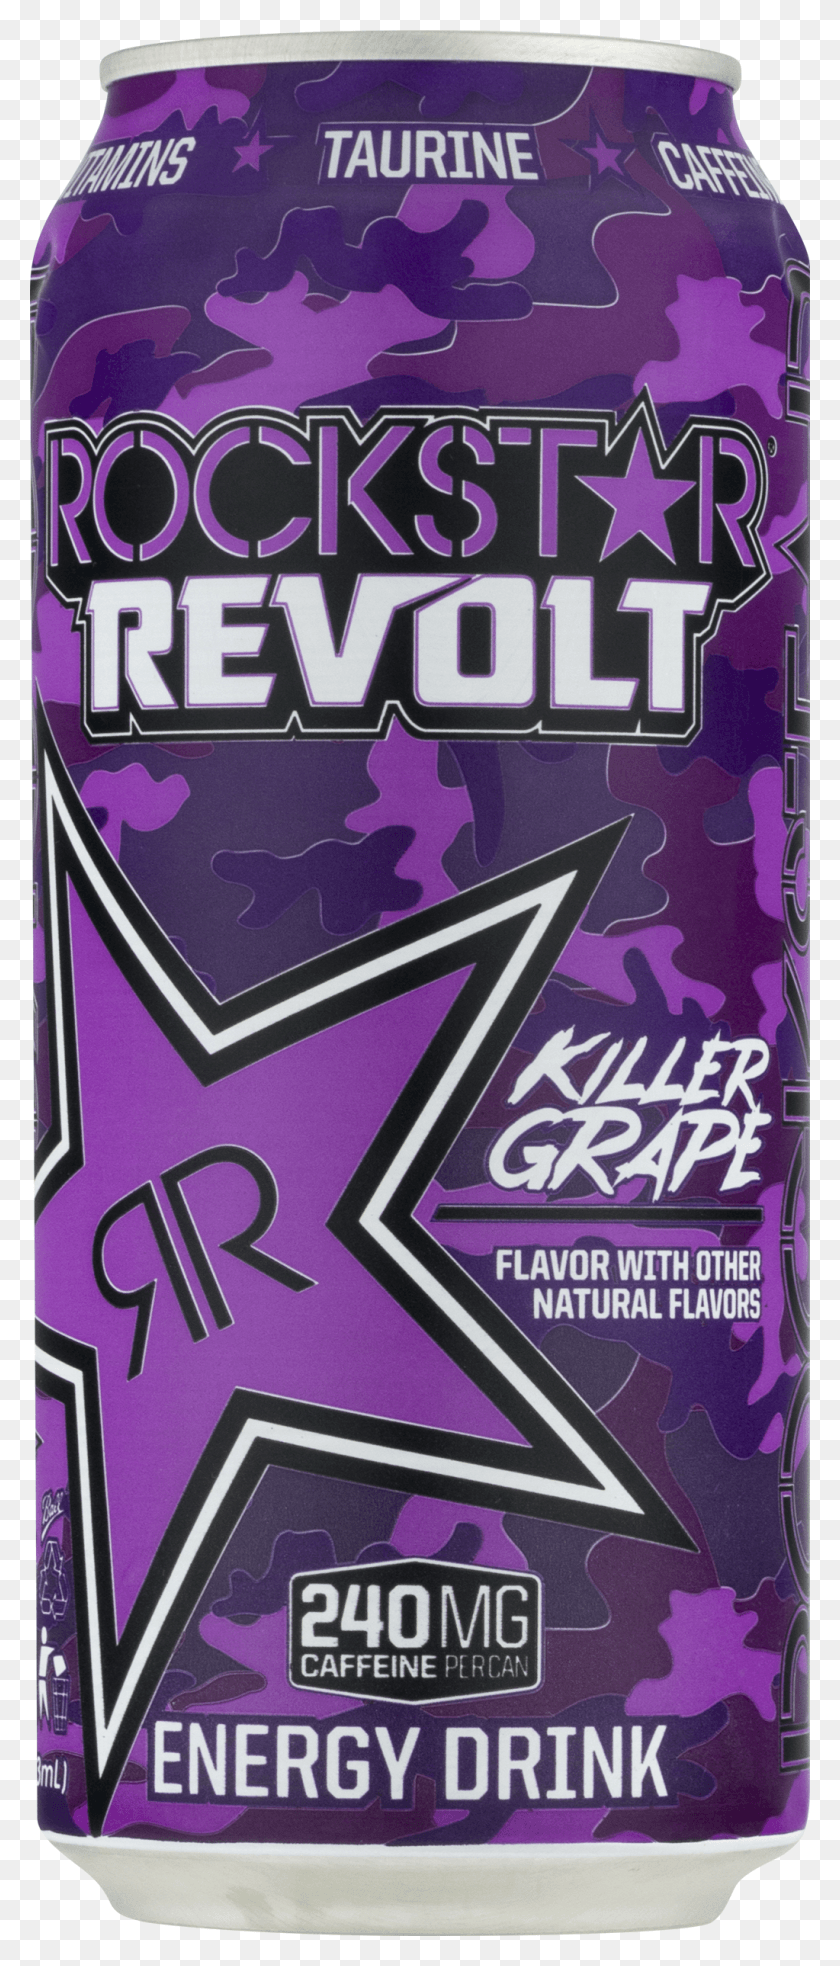 1023x2500 Rockstar Revolt Killer Grape, Реклама, Плакат, Флаер Png Скачать